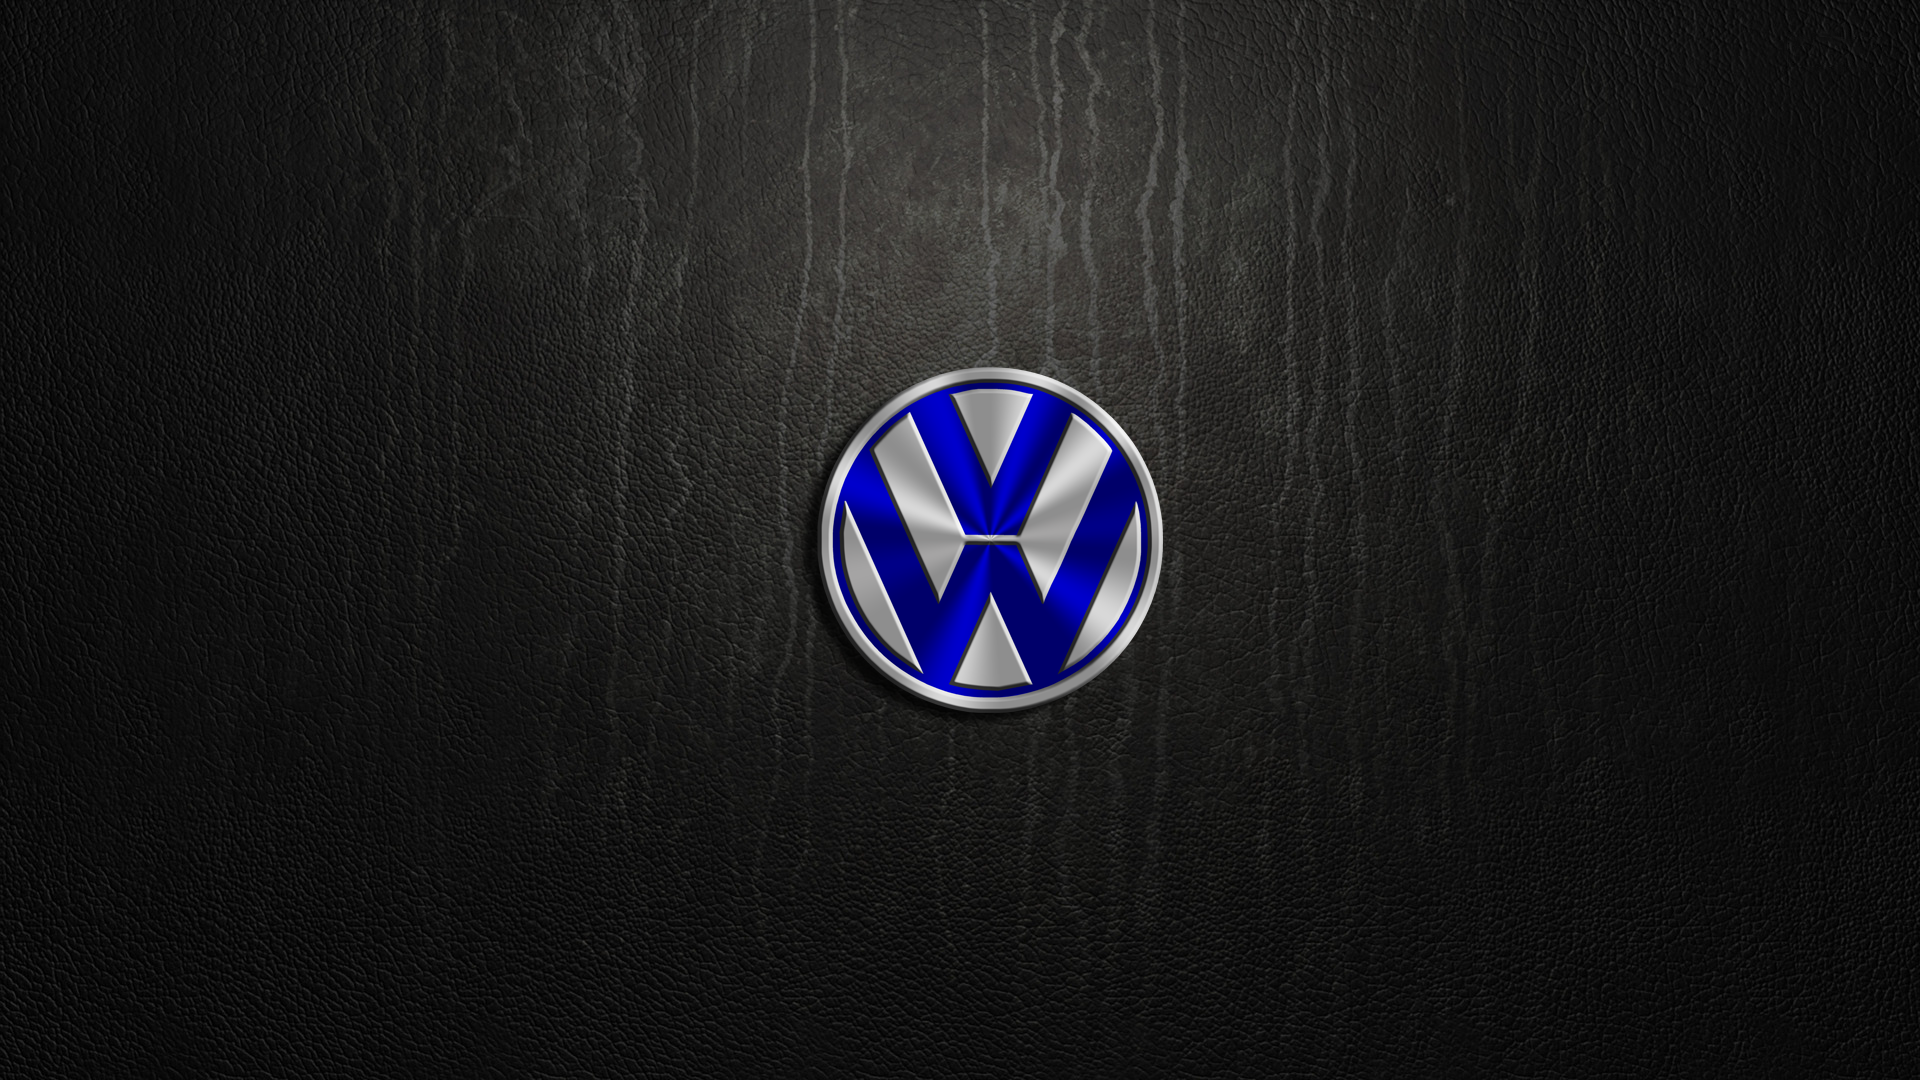 308 Volkswagen HD Wallpapers | Backgrounds - Wallpaper Abyss